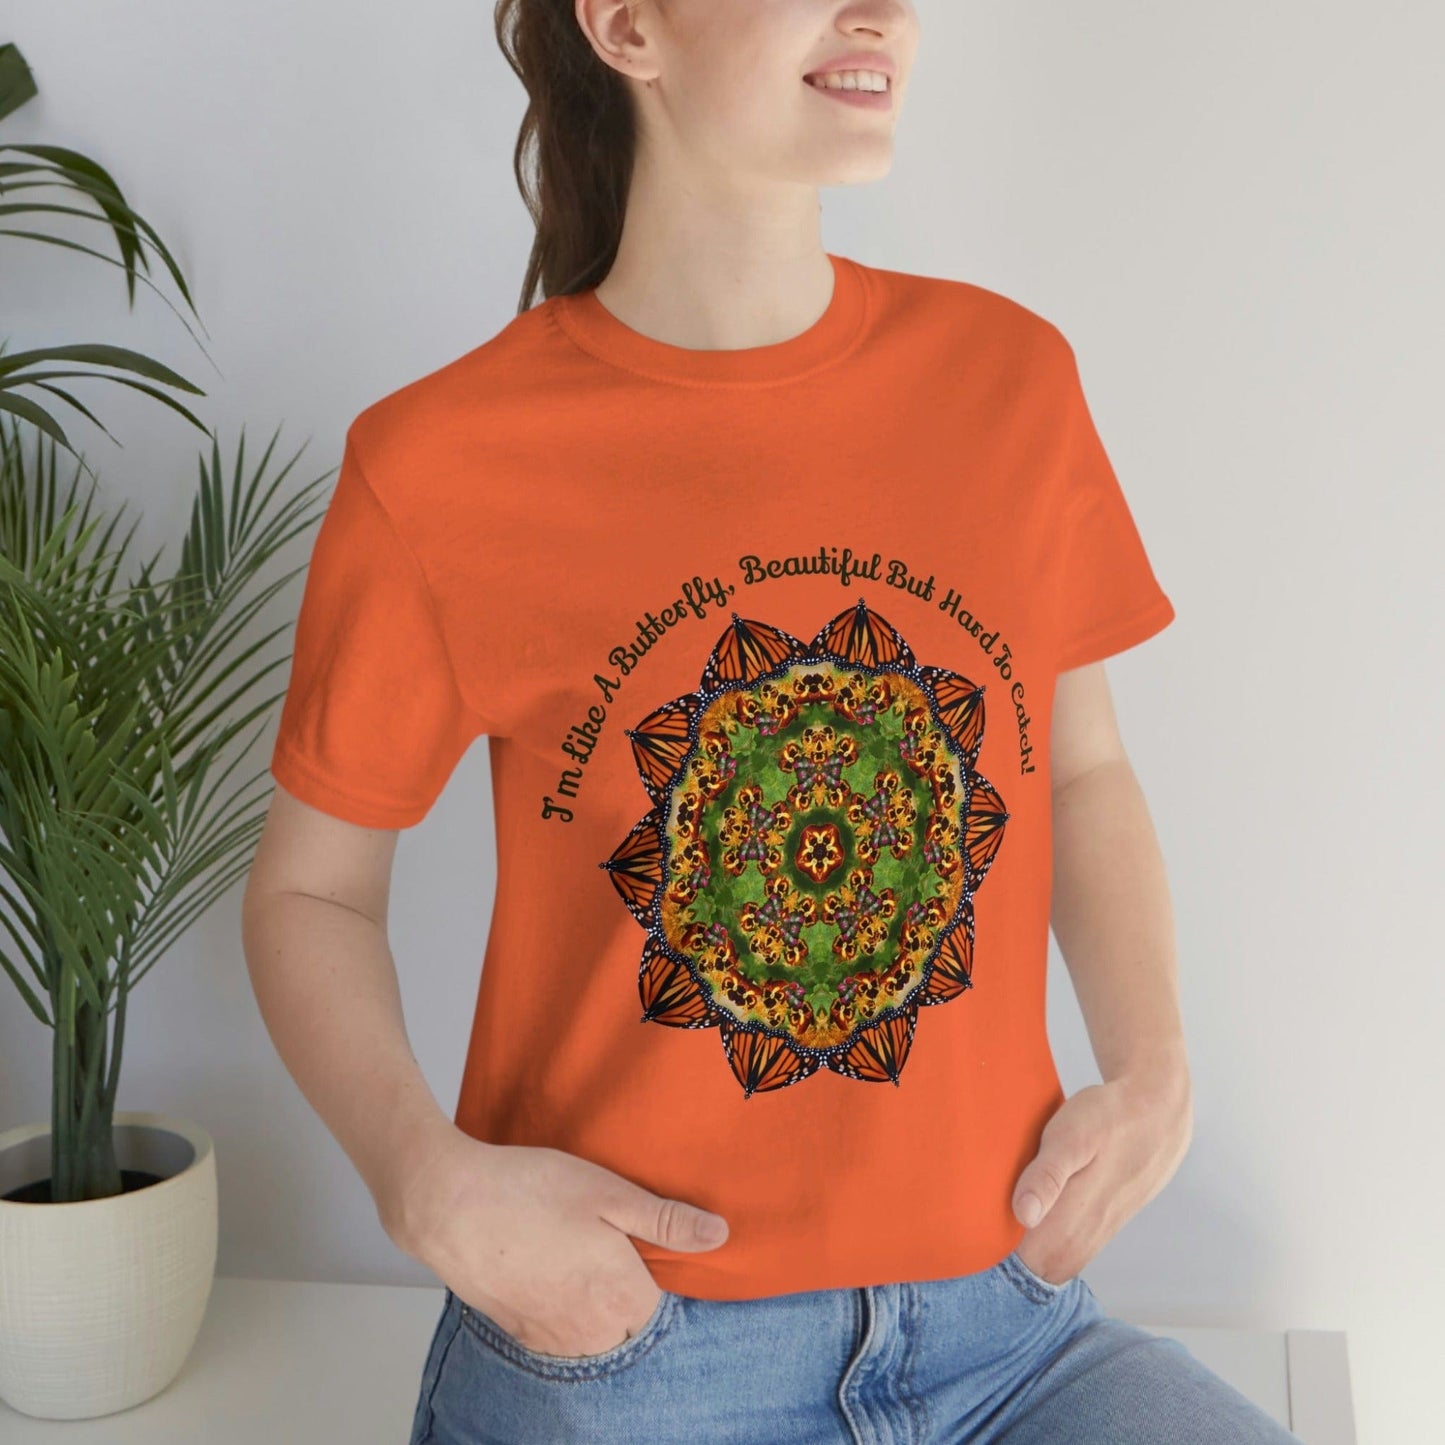 Butterfly Top, Zen Mystical Poet Shirt, Cottage Core Bug, Shirt, Best Selling Shirts, Insect Shirt, Cute Shirts Teens & Women Yoga Shirt 4